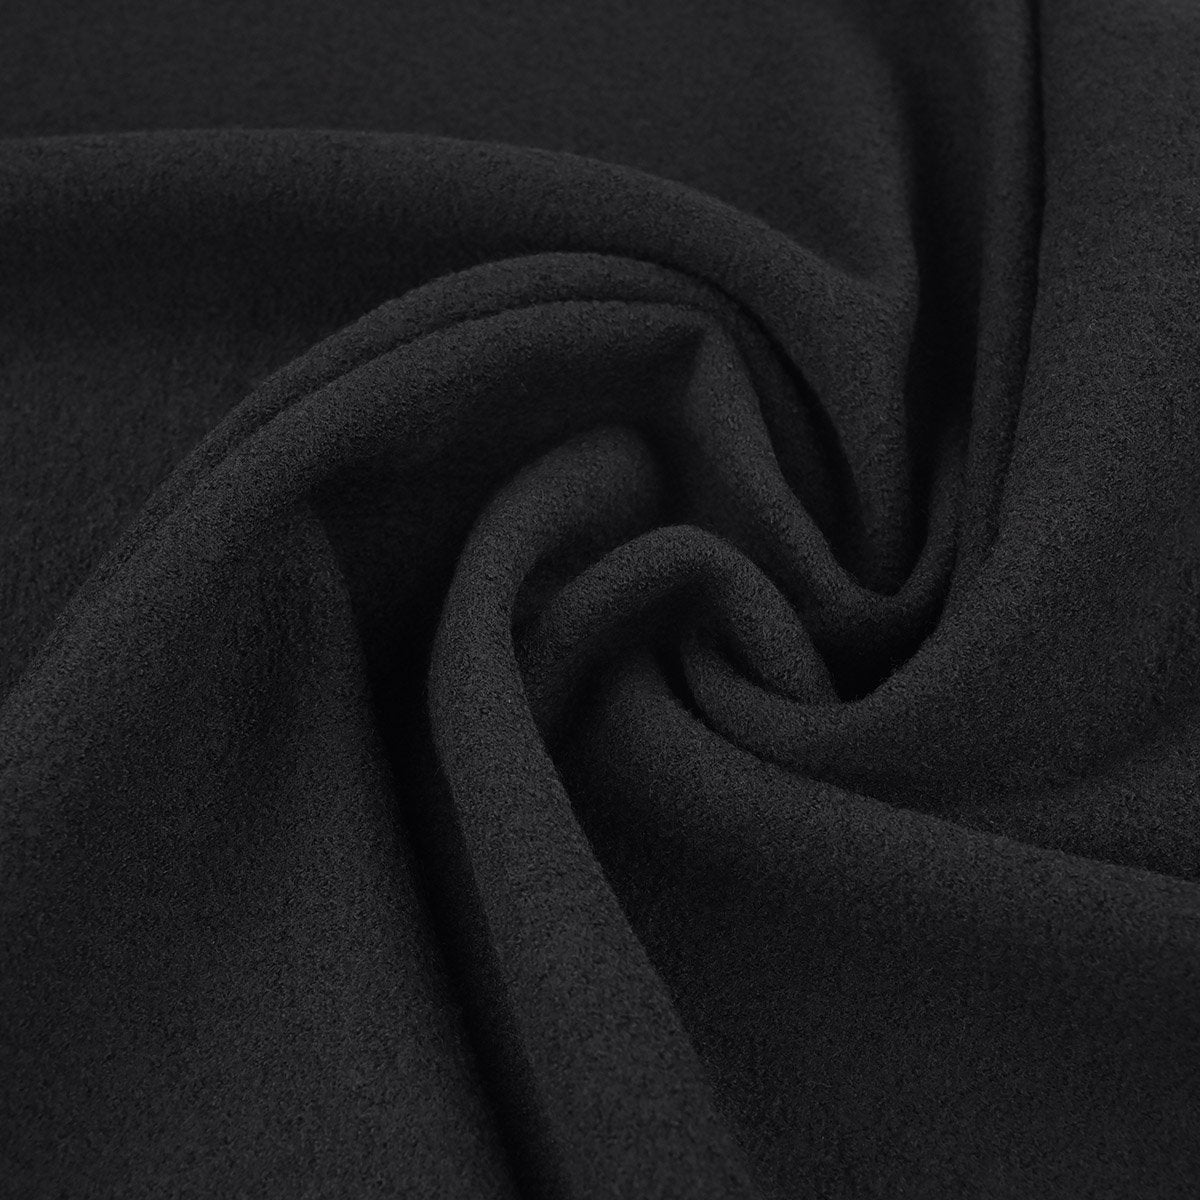 Black Curly Coating Fabric 97516